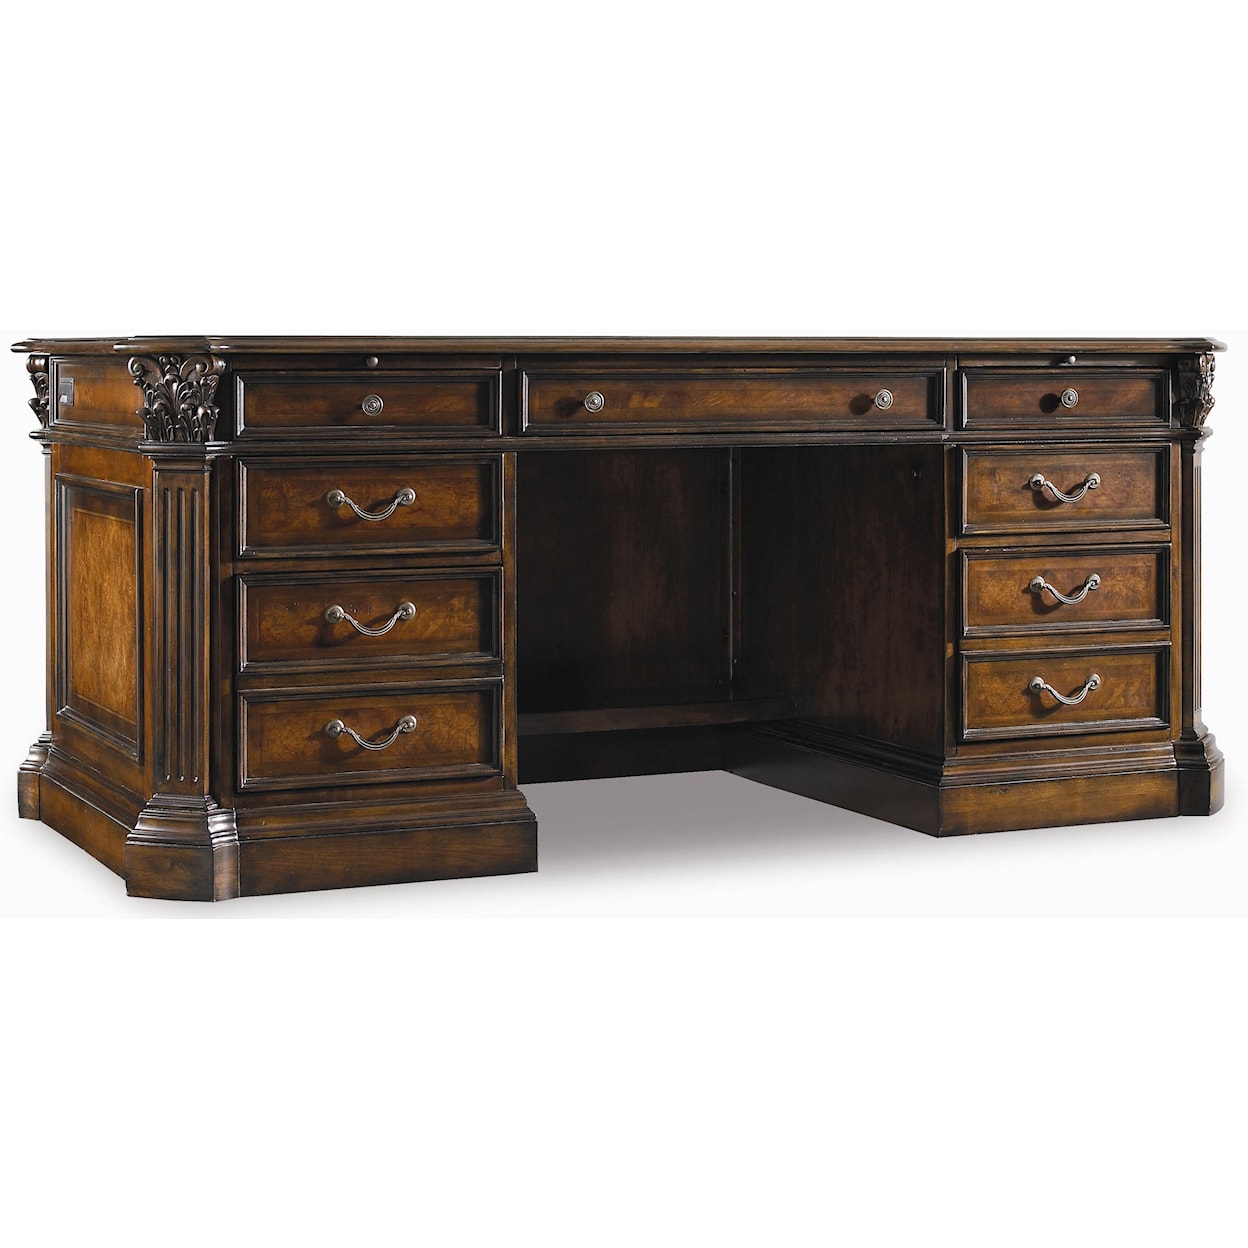 Hooker Furniture European Renaissance II Executive Desk 73 inch